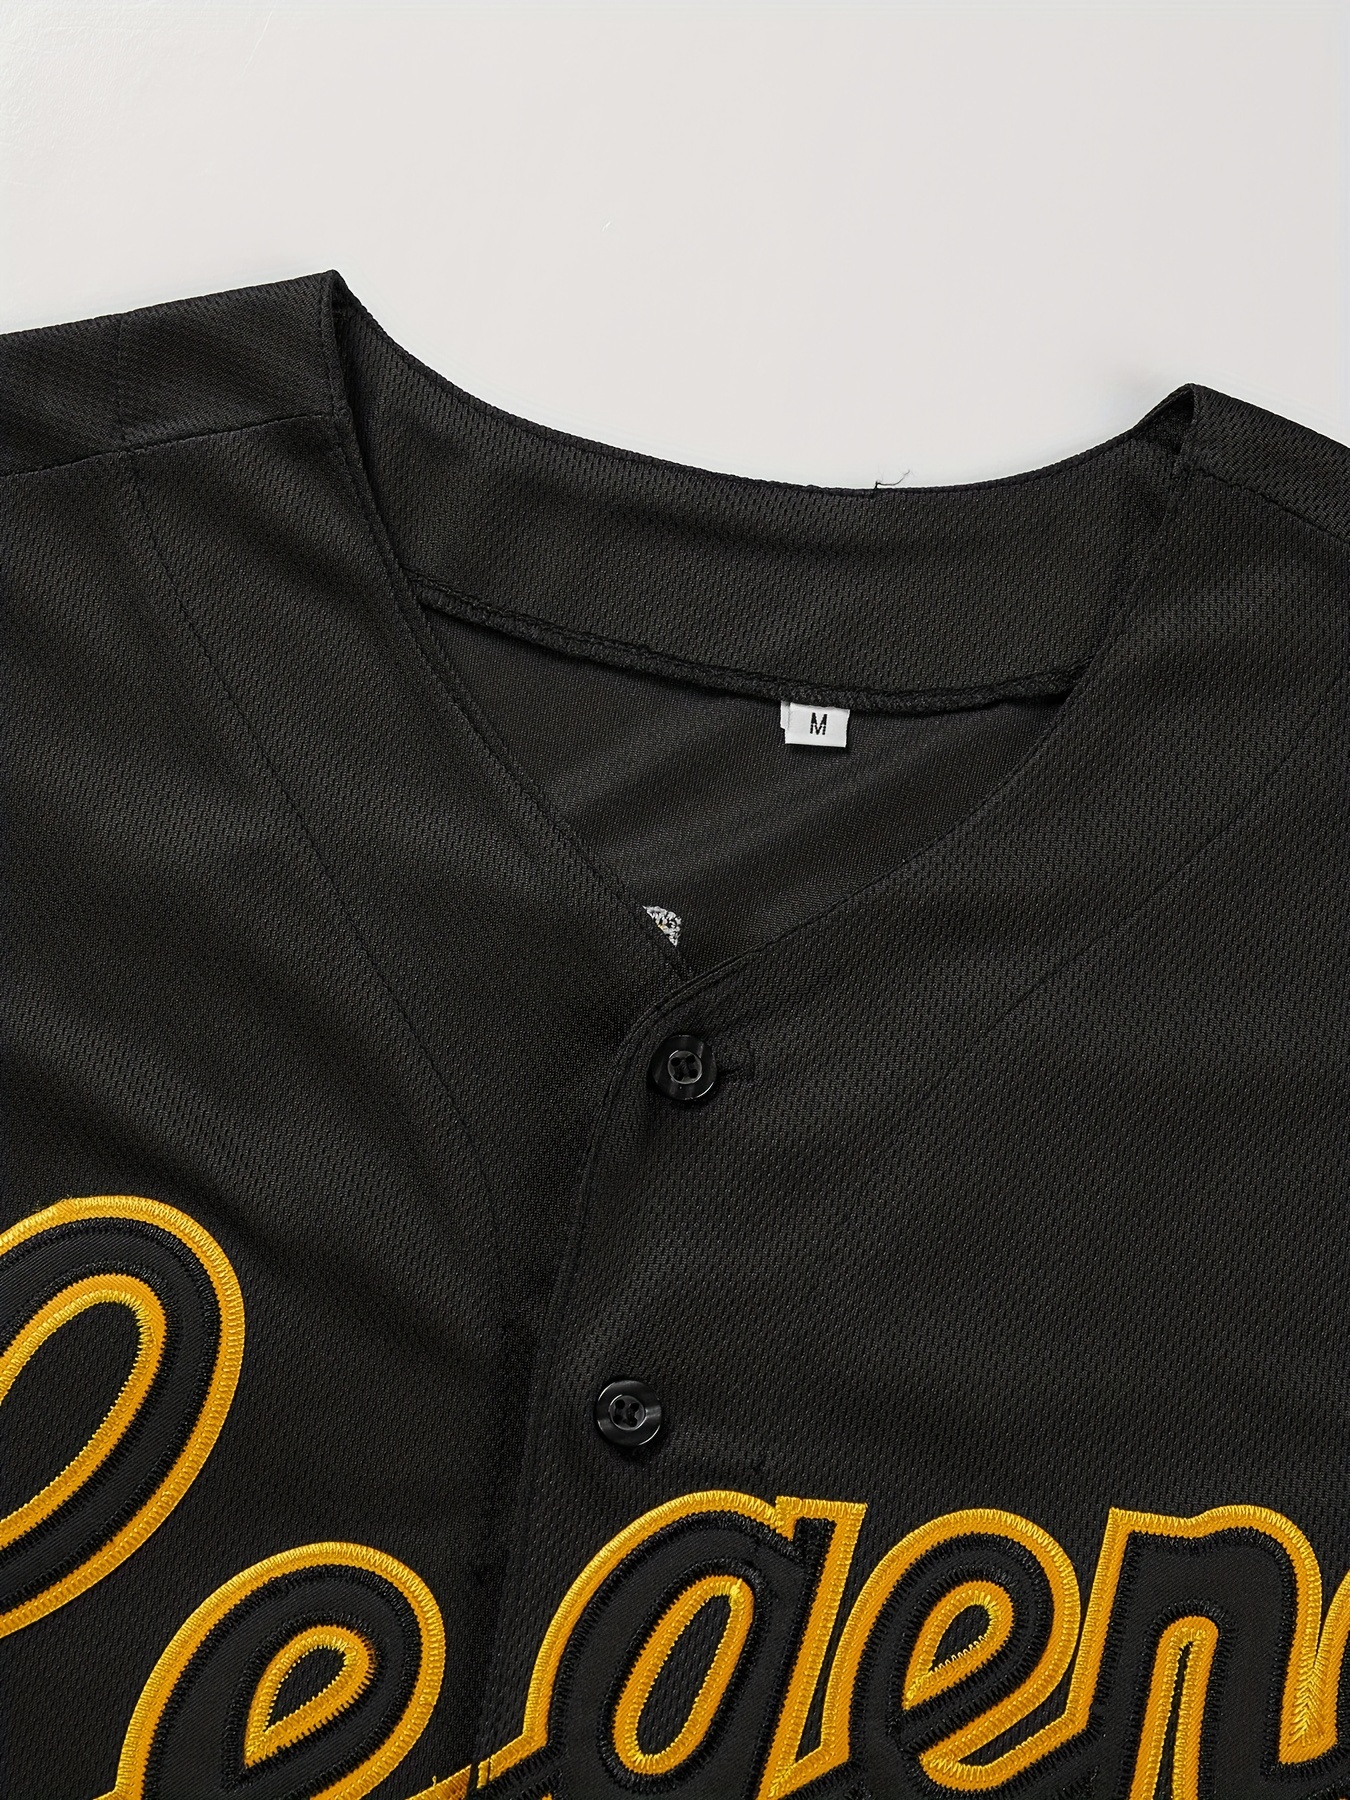 Men's Legend #8 24 Baseball Jersey, Embroidered Button Up Short